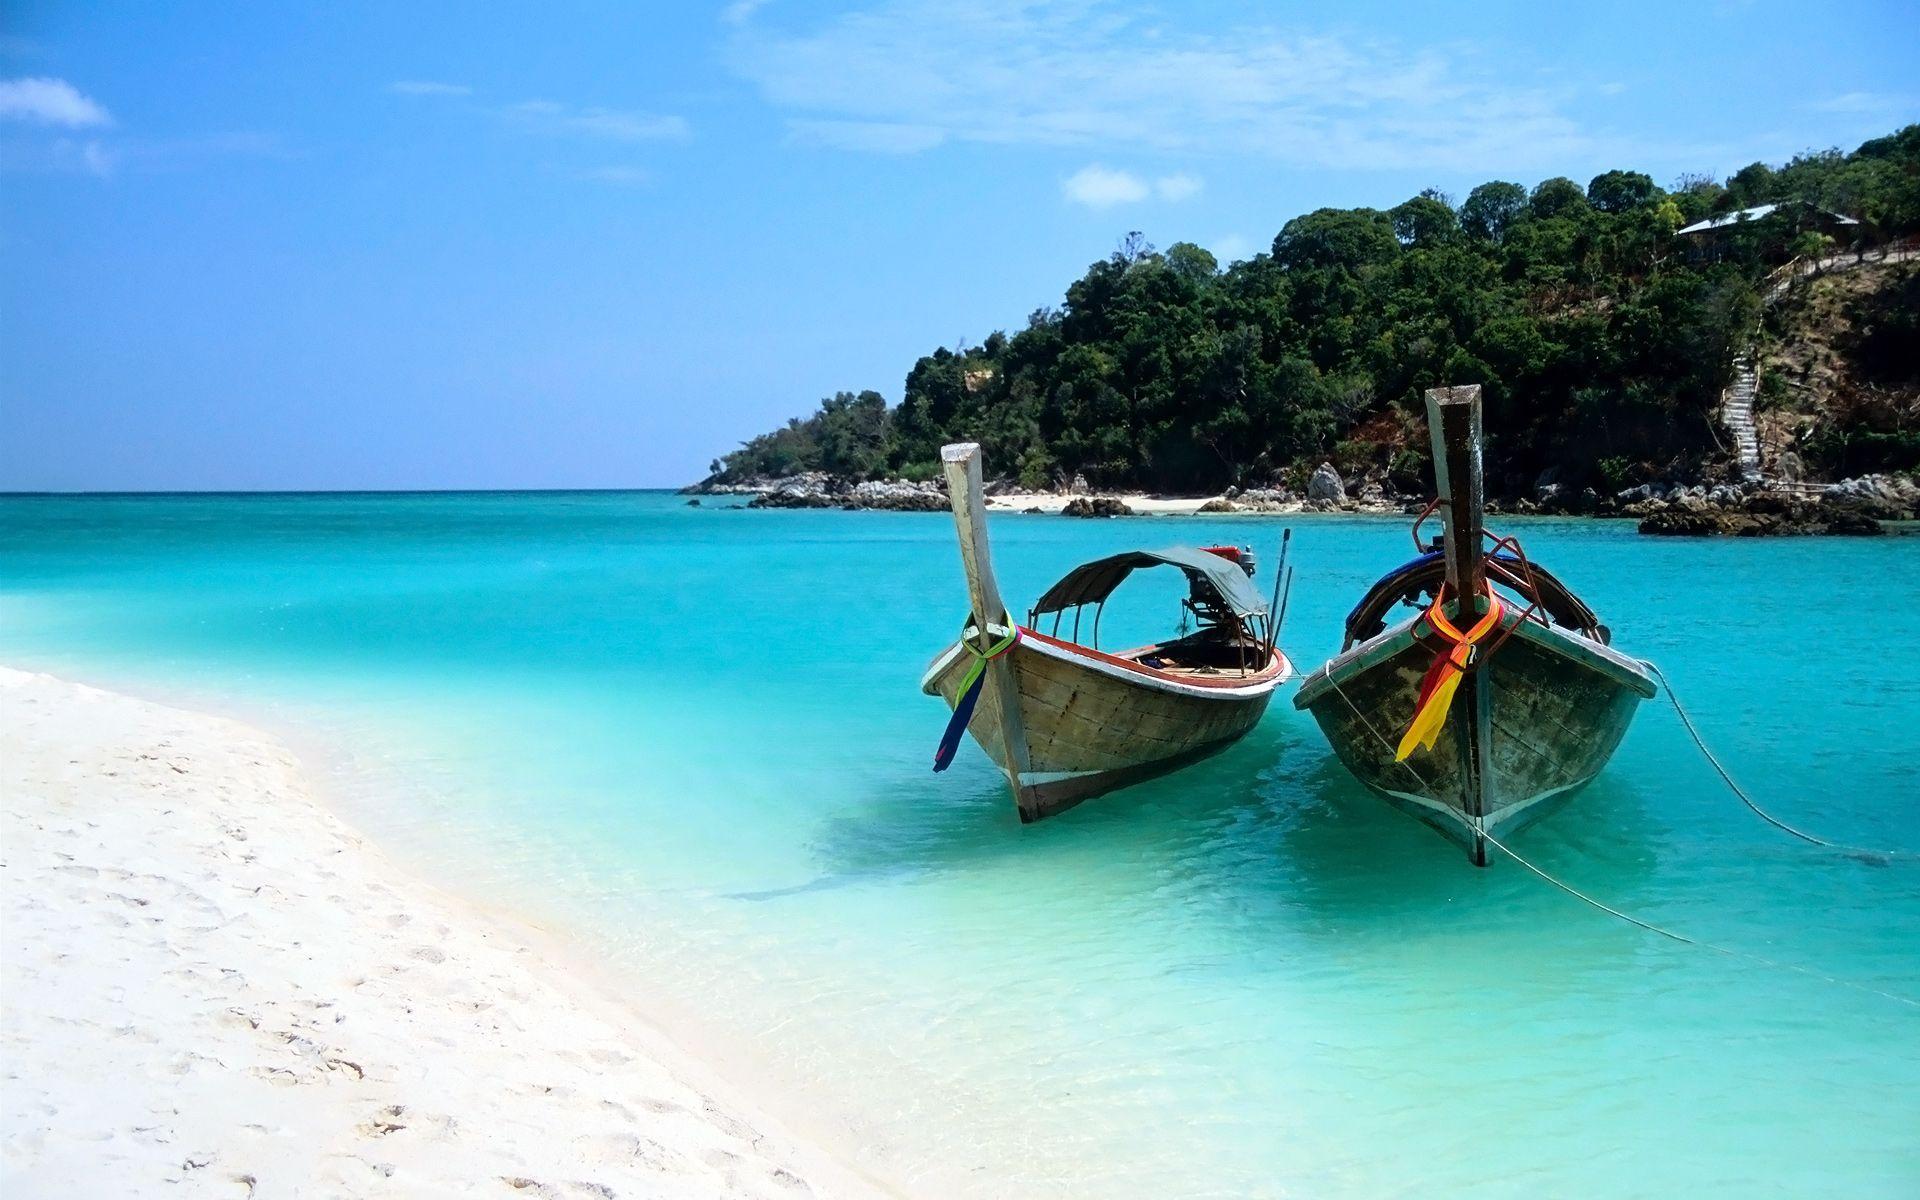 Phuket has a stunning combination of golden beaches, turquoise seas